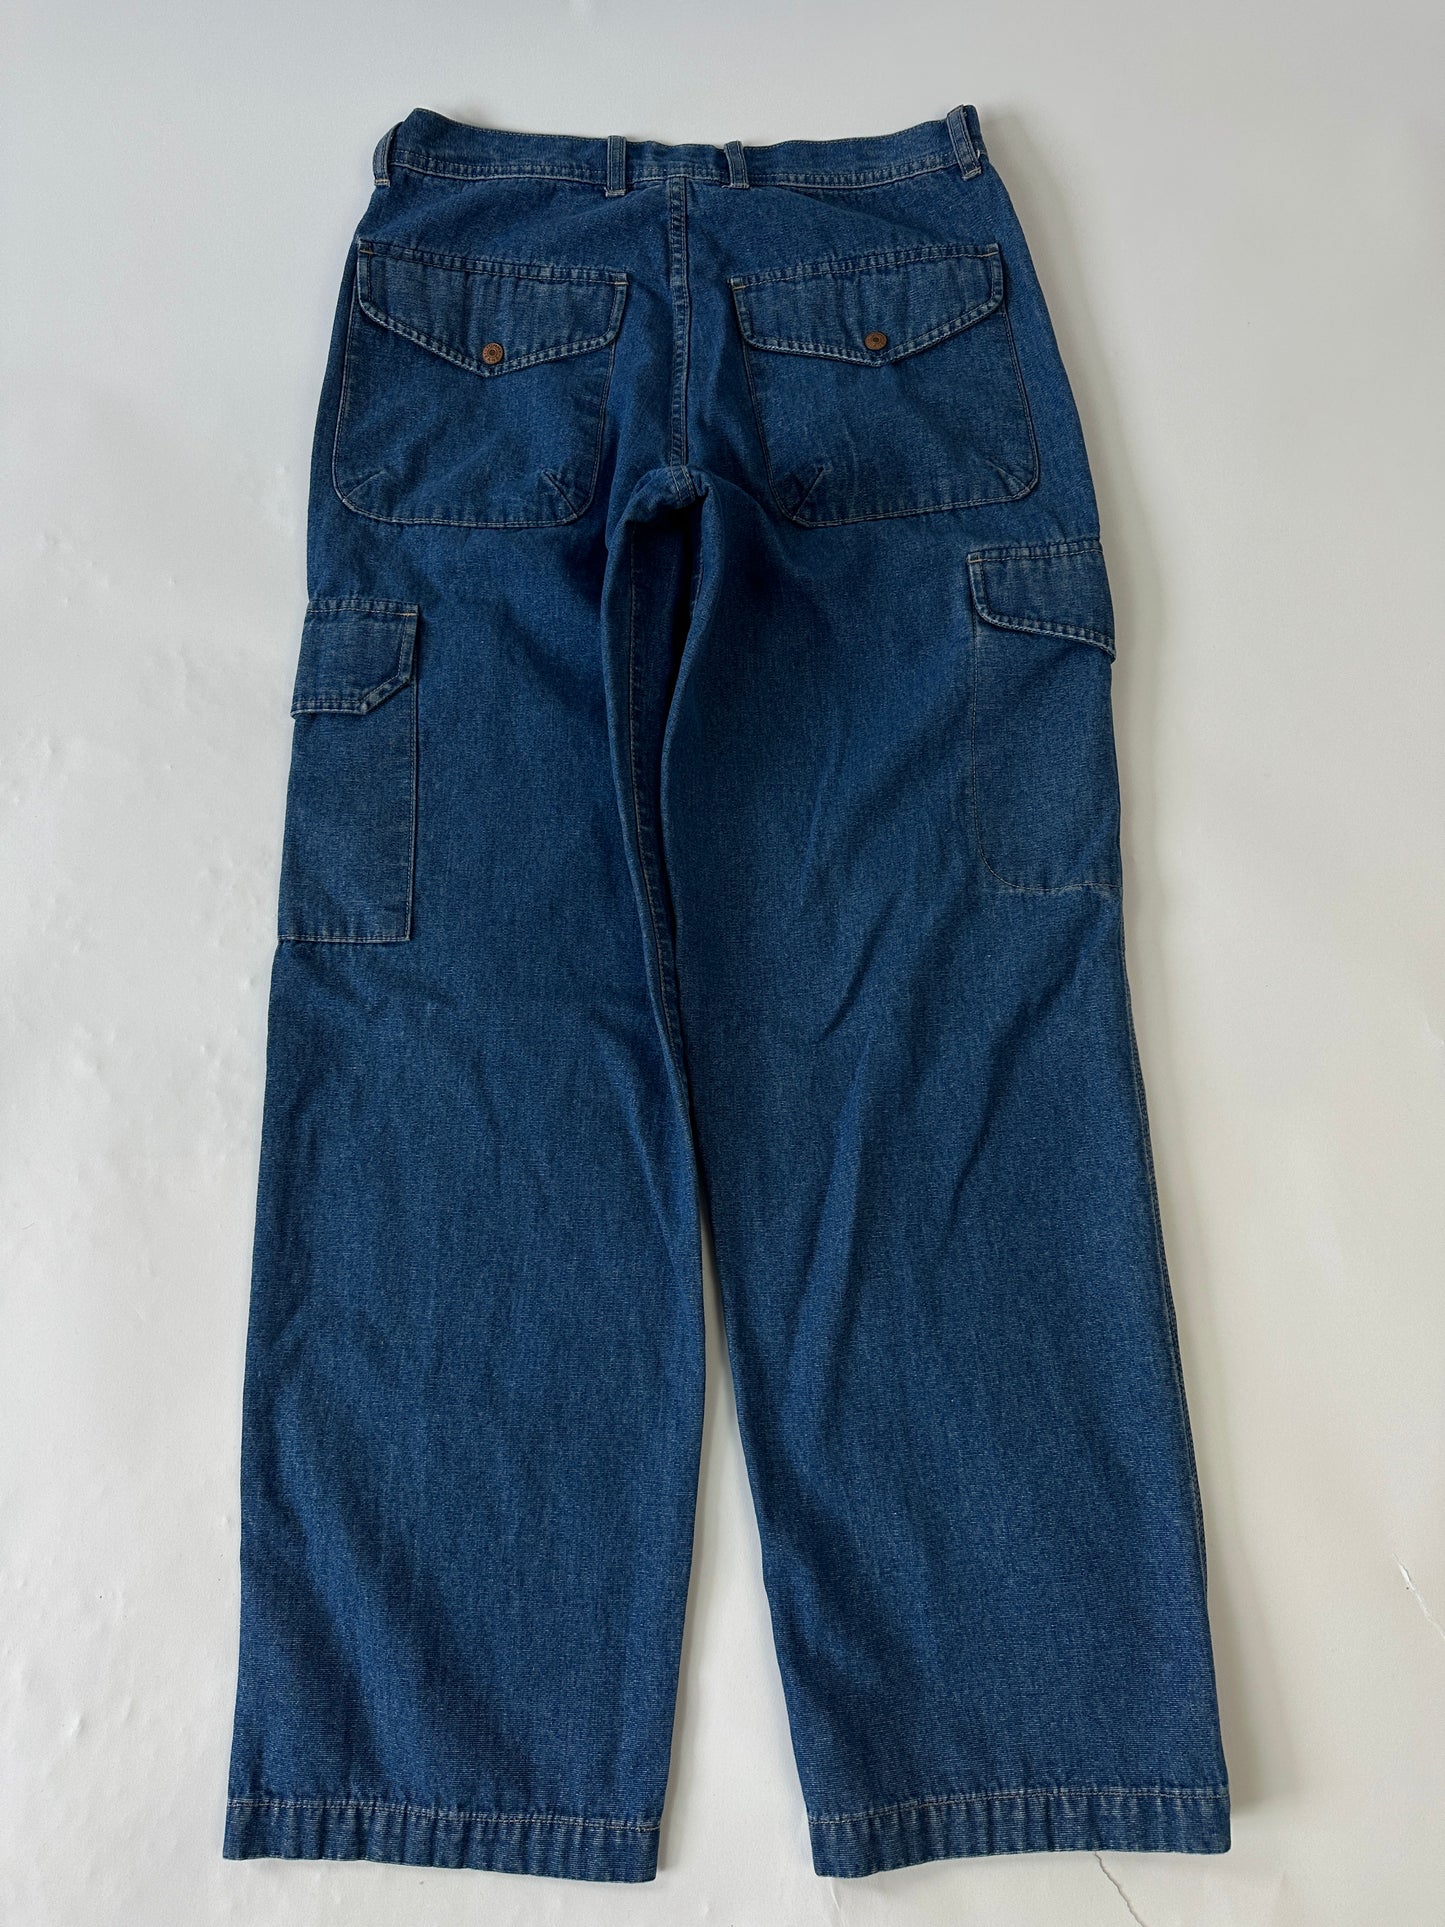 Tommy Hilfiger Cargo Vintage Jeans - 32 x 32